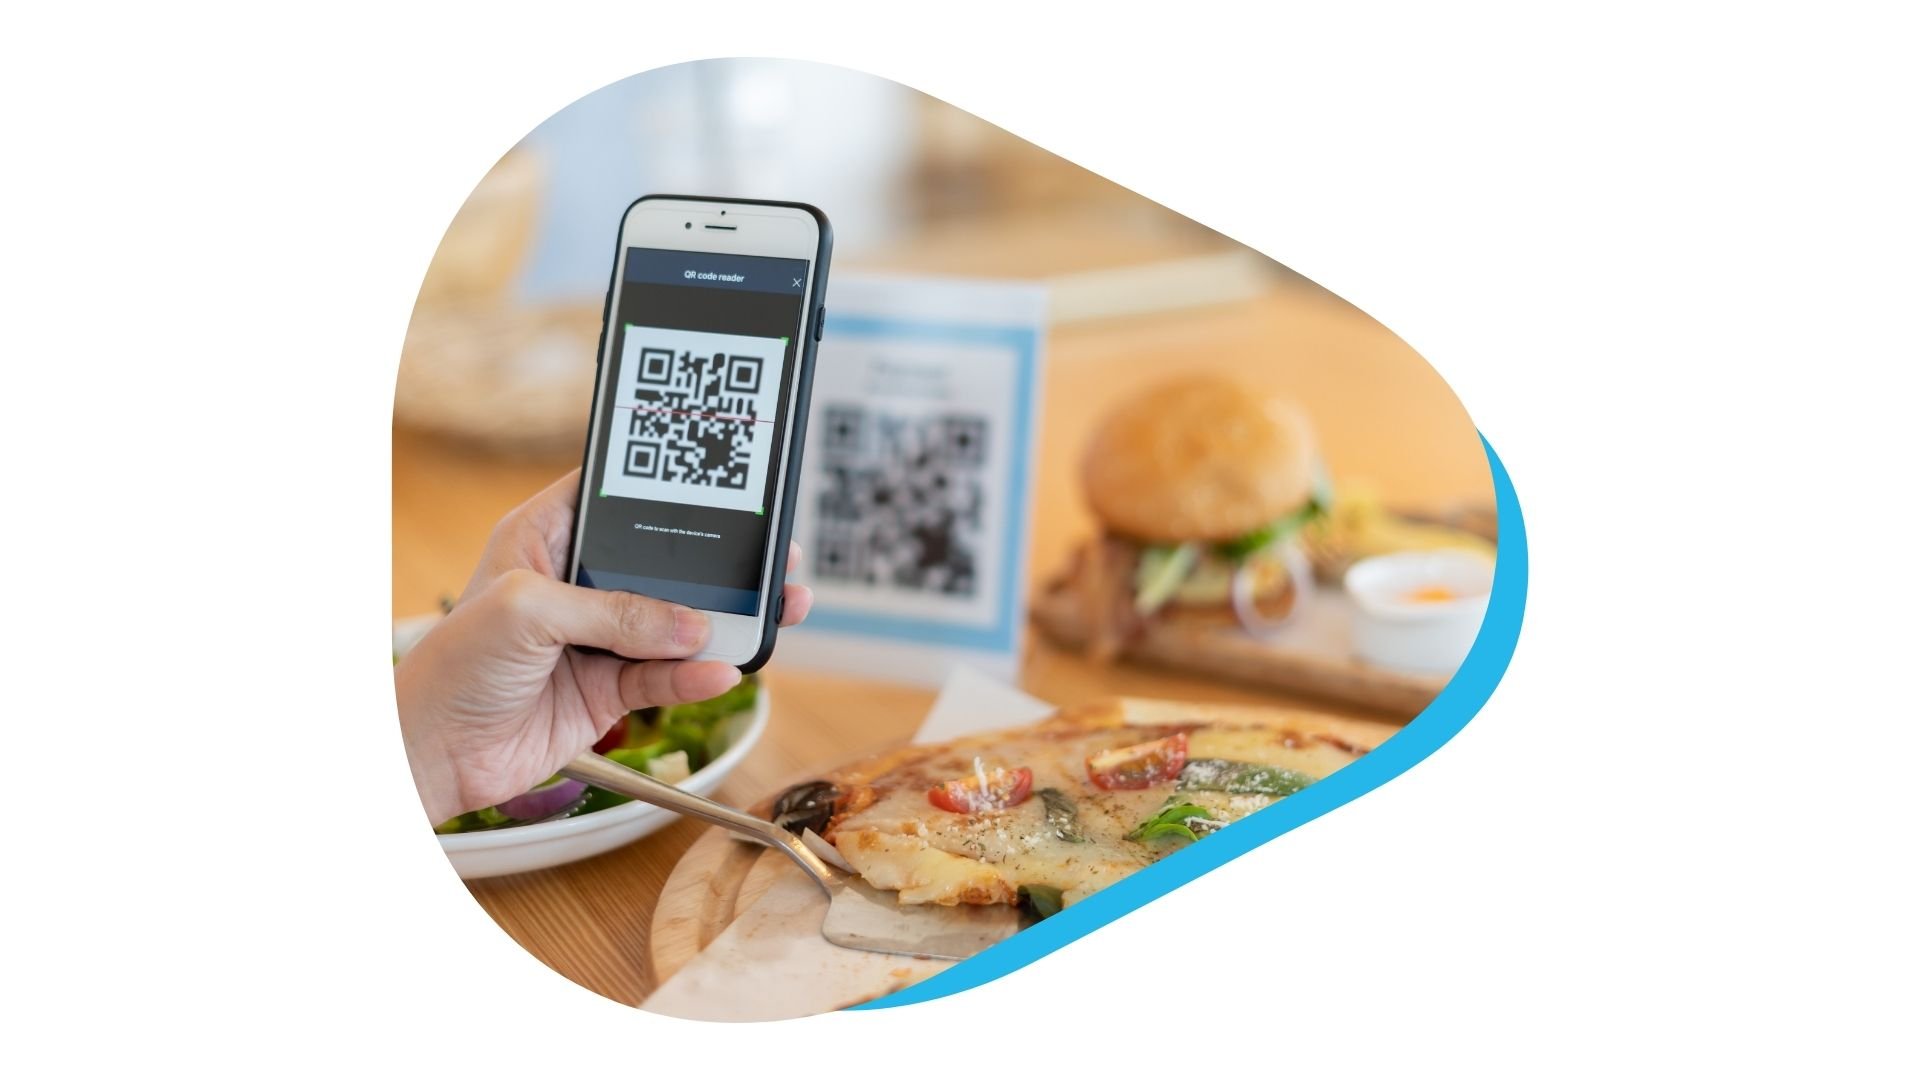 Smartphone scanning QR code in restaurant